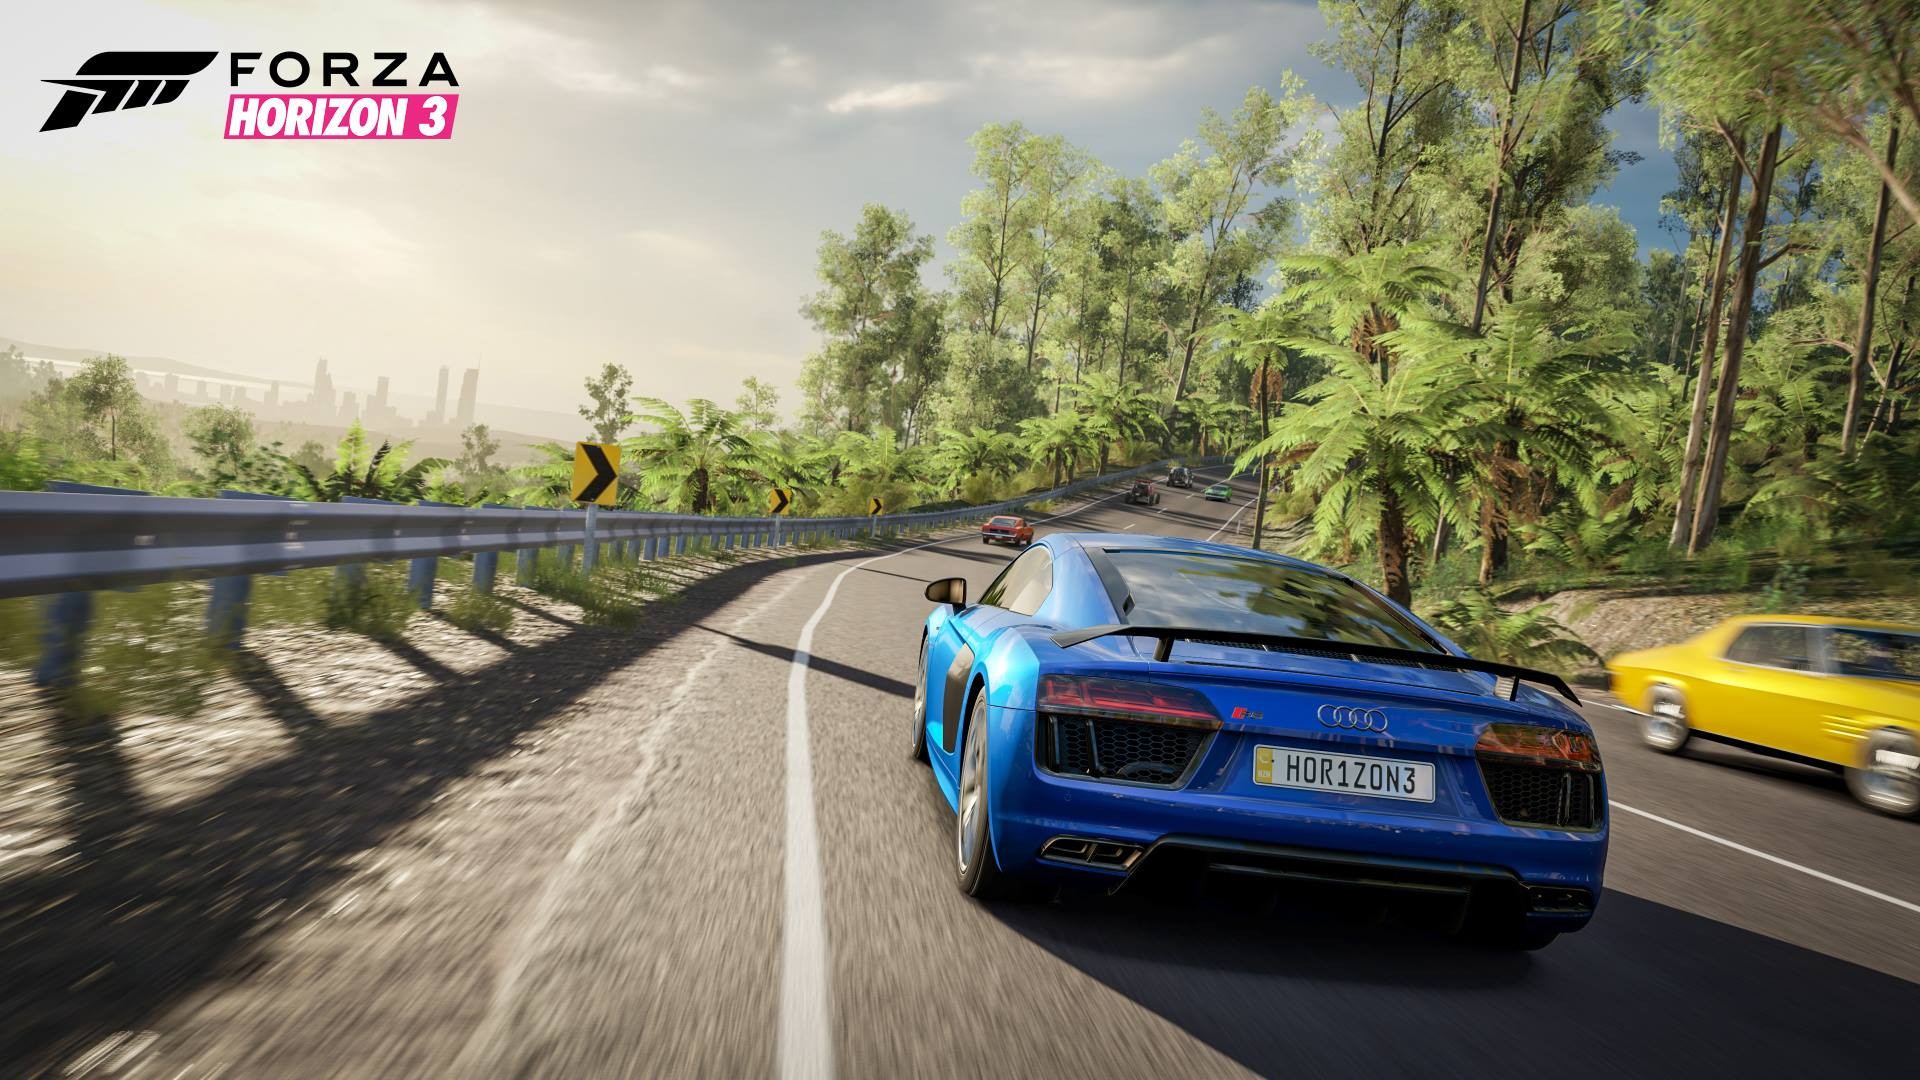 General 1920x1080 Forza Forza Horizon 3 racing car Audi Audi R8 Turn 10 Studios video games blue cars vehicle